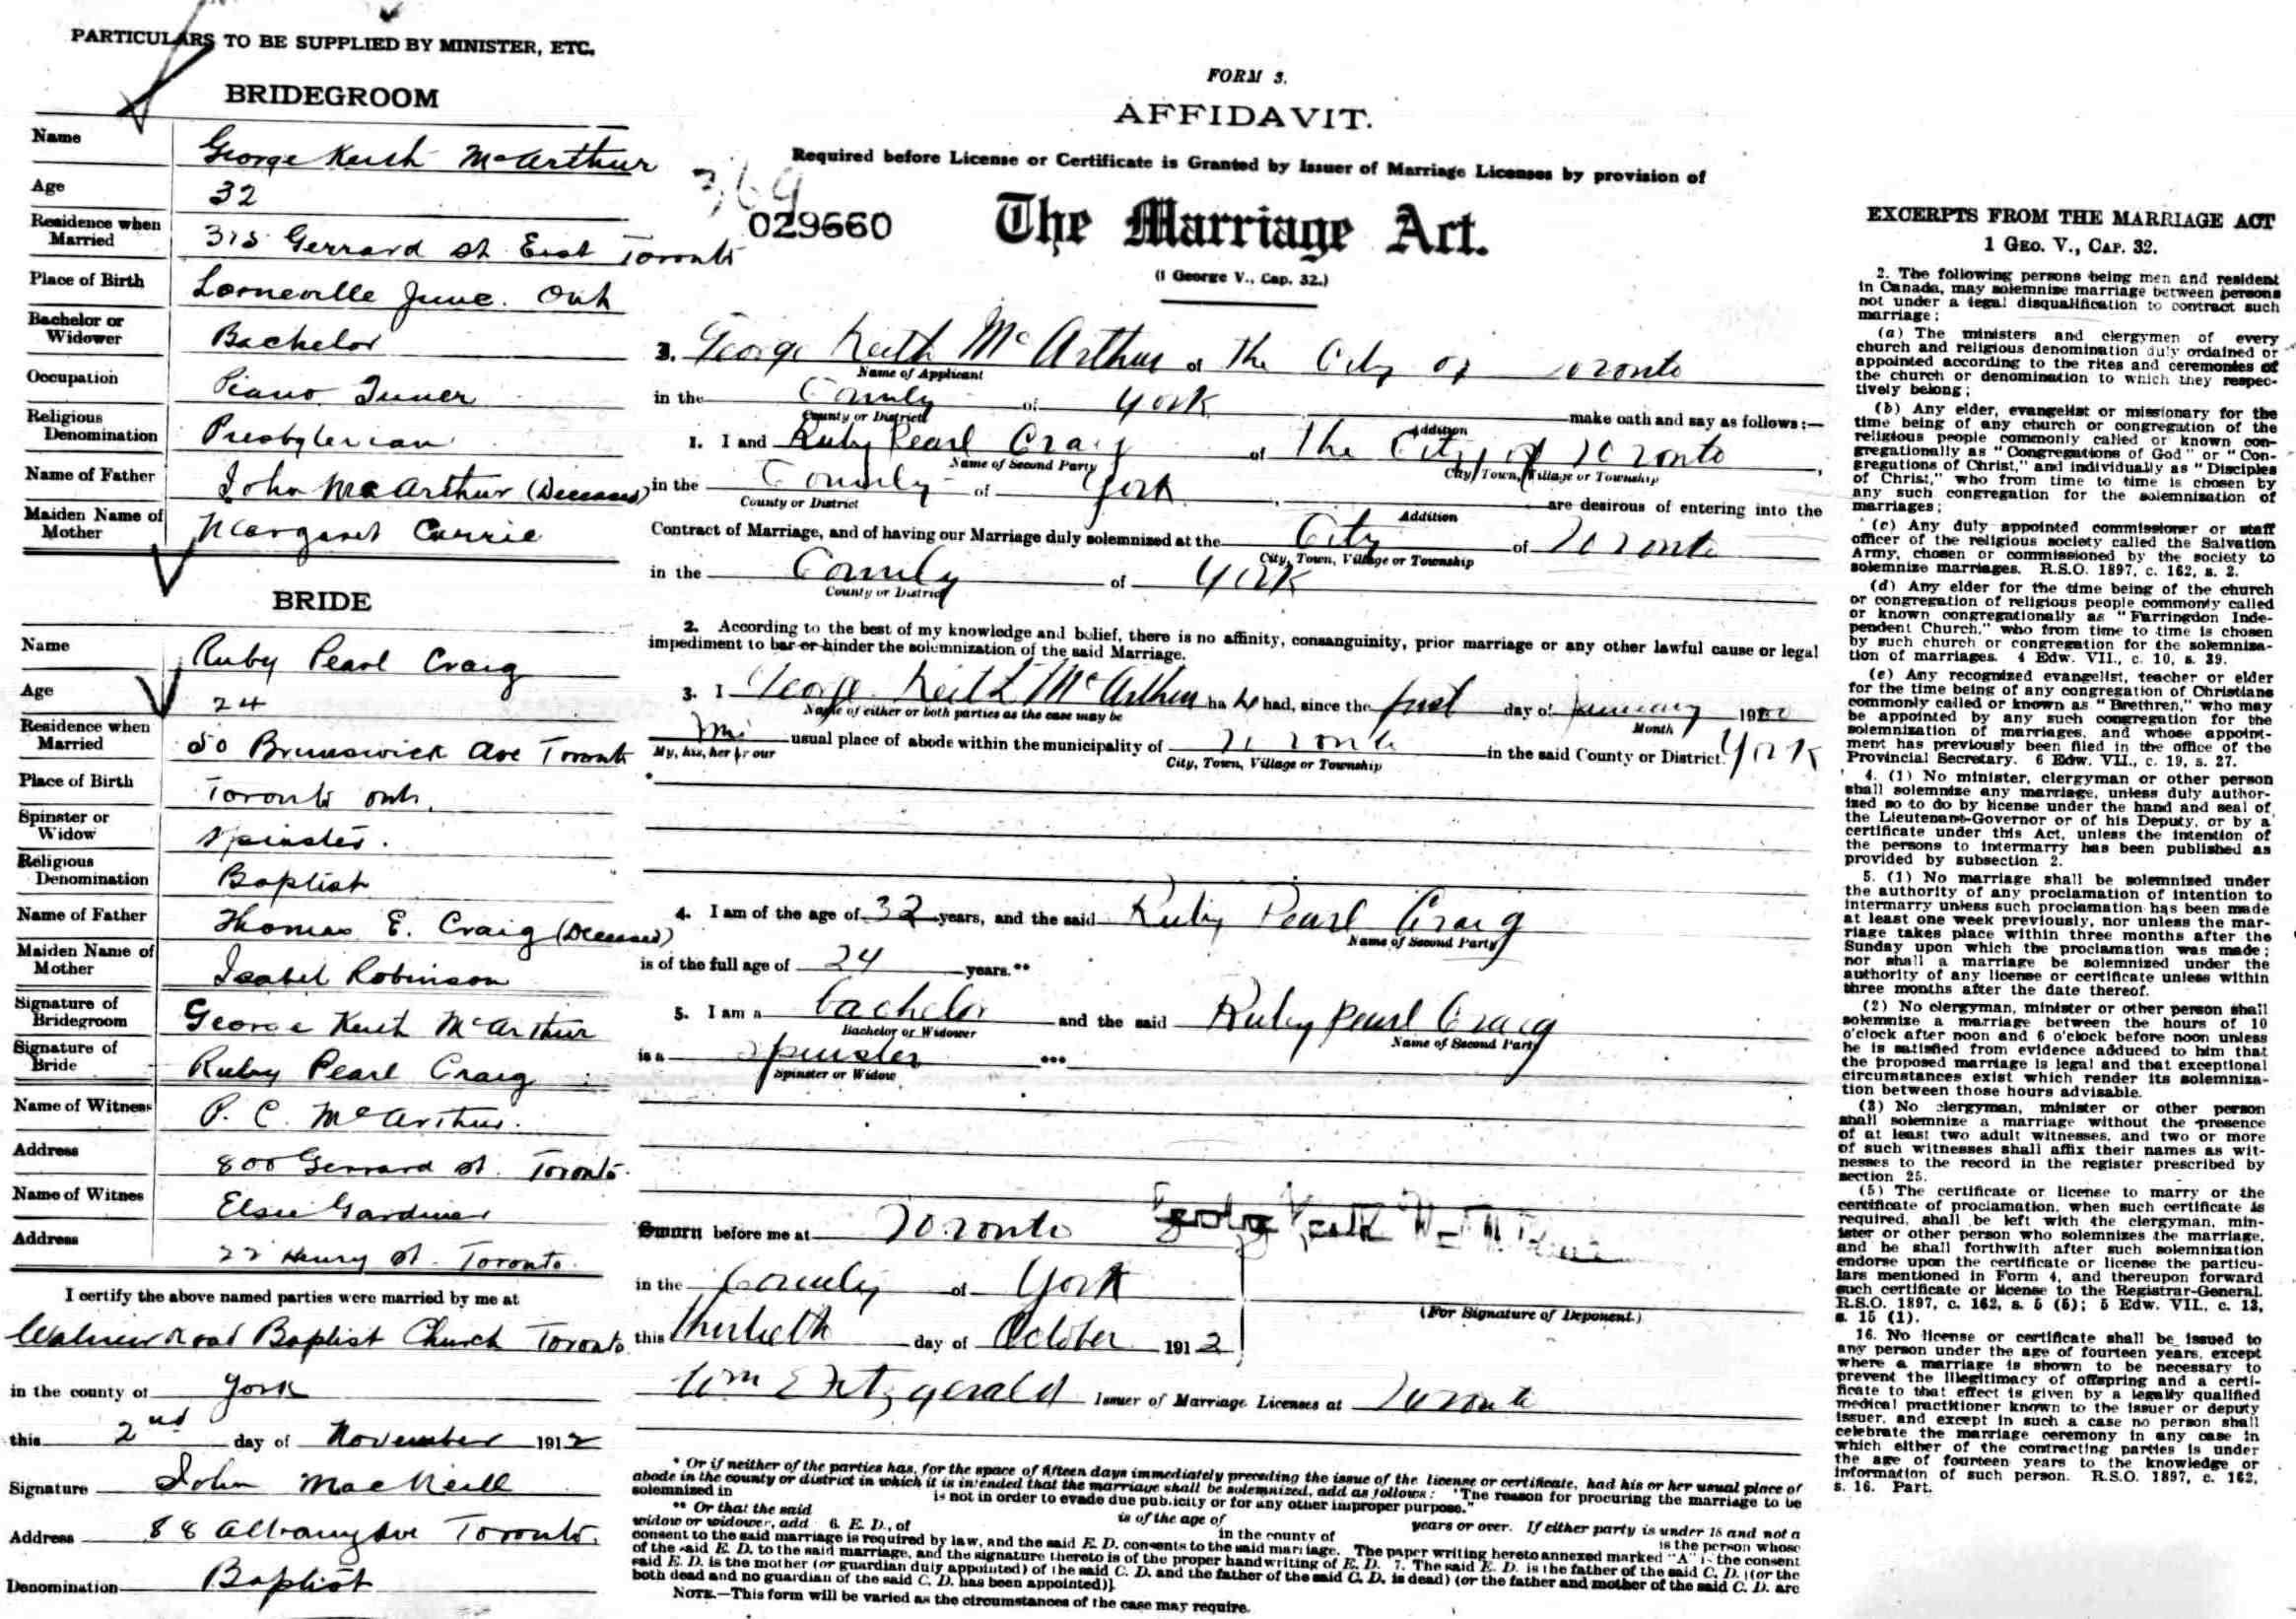 marriage record - george mcarthur + ruby craig 1912.jpg